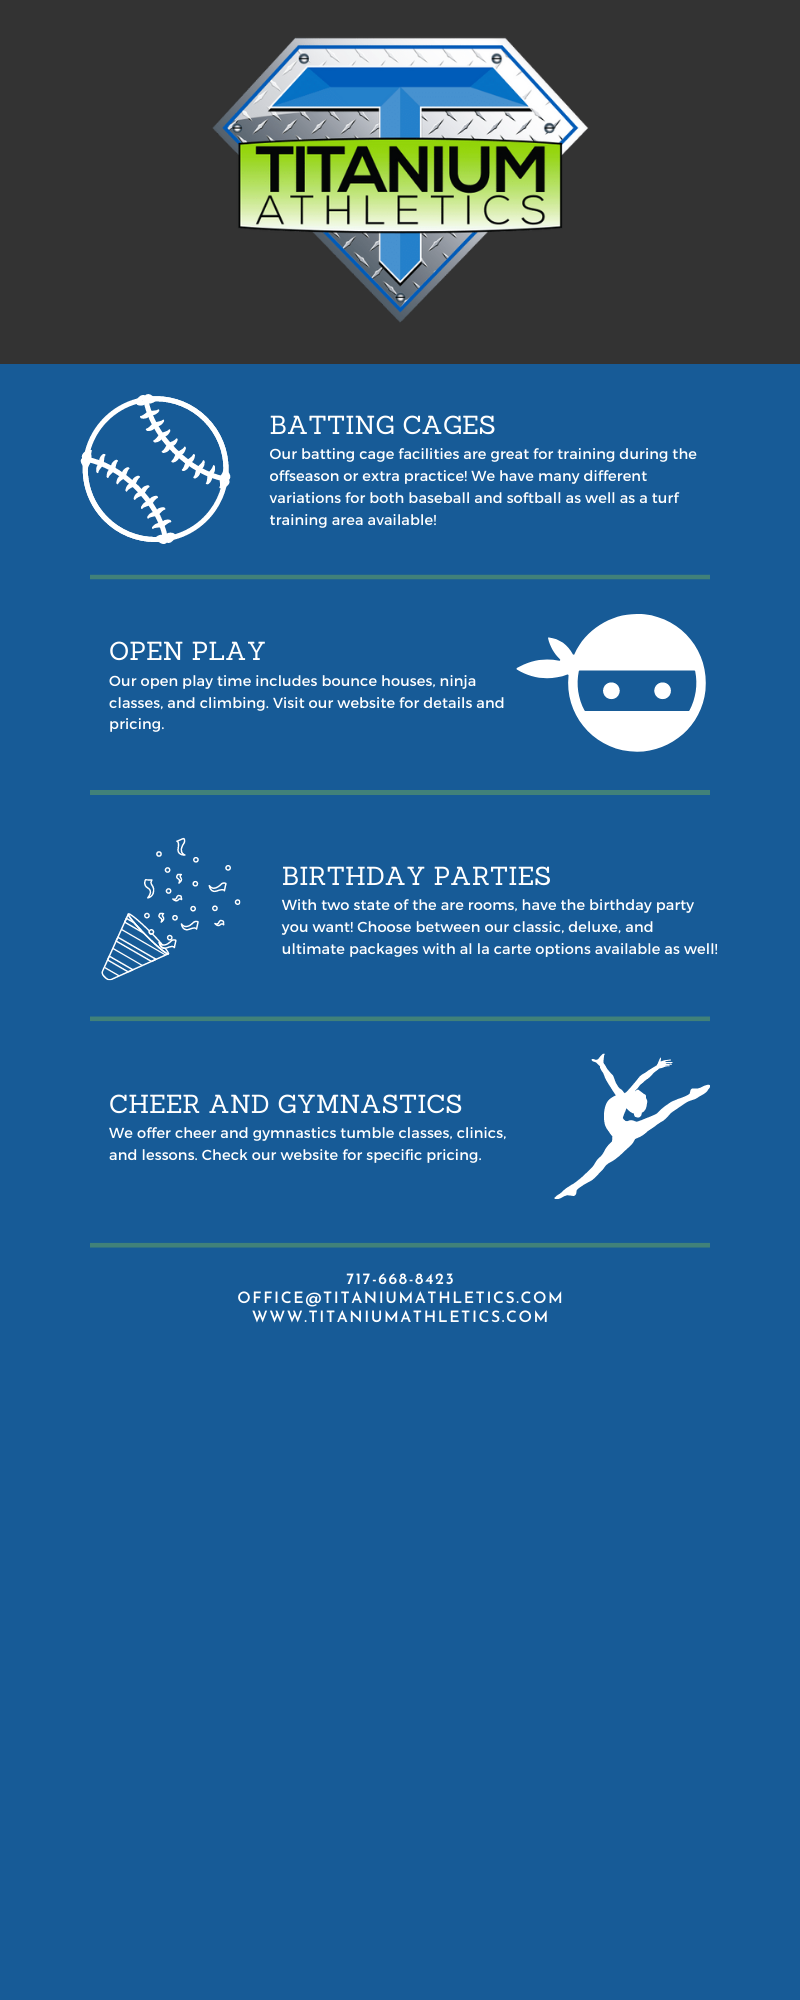 Titanium Athletics Marketing Infographic May 2021